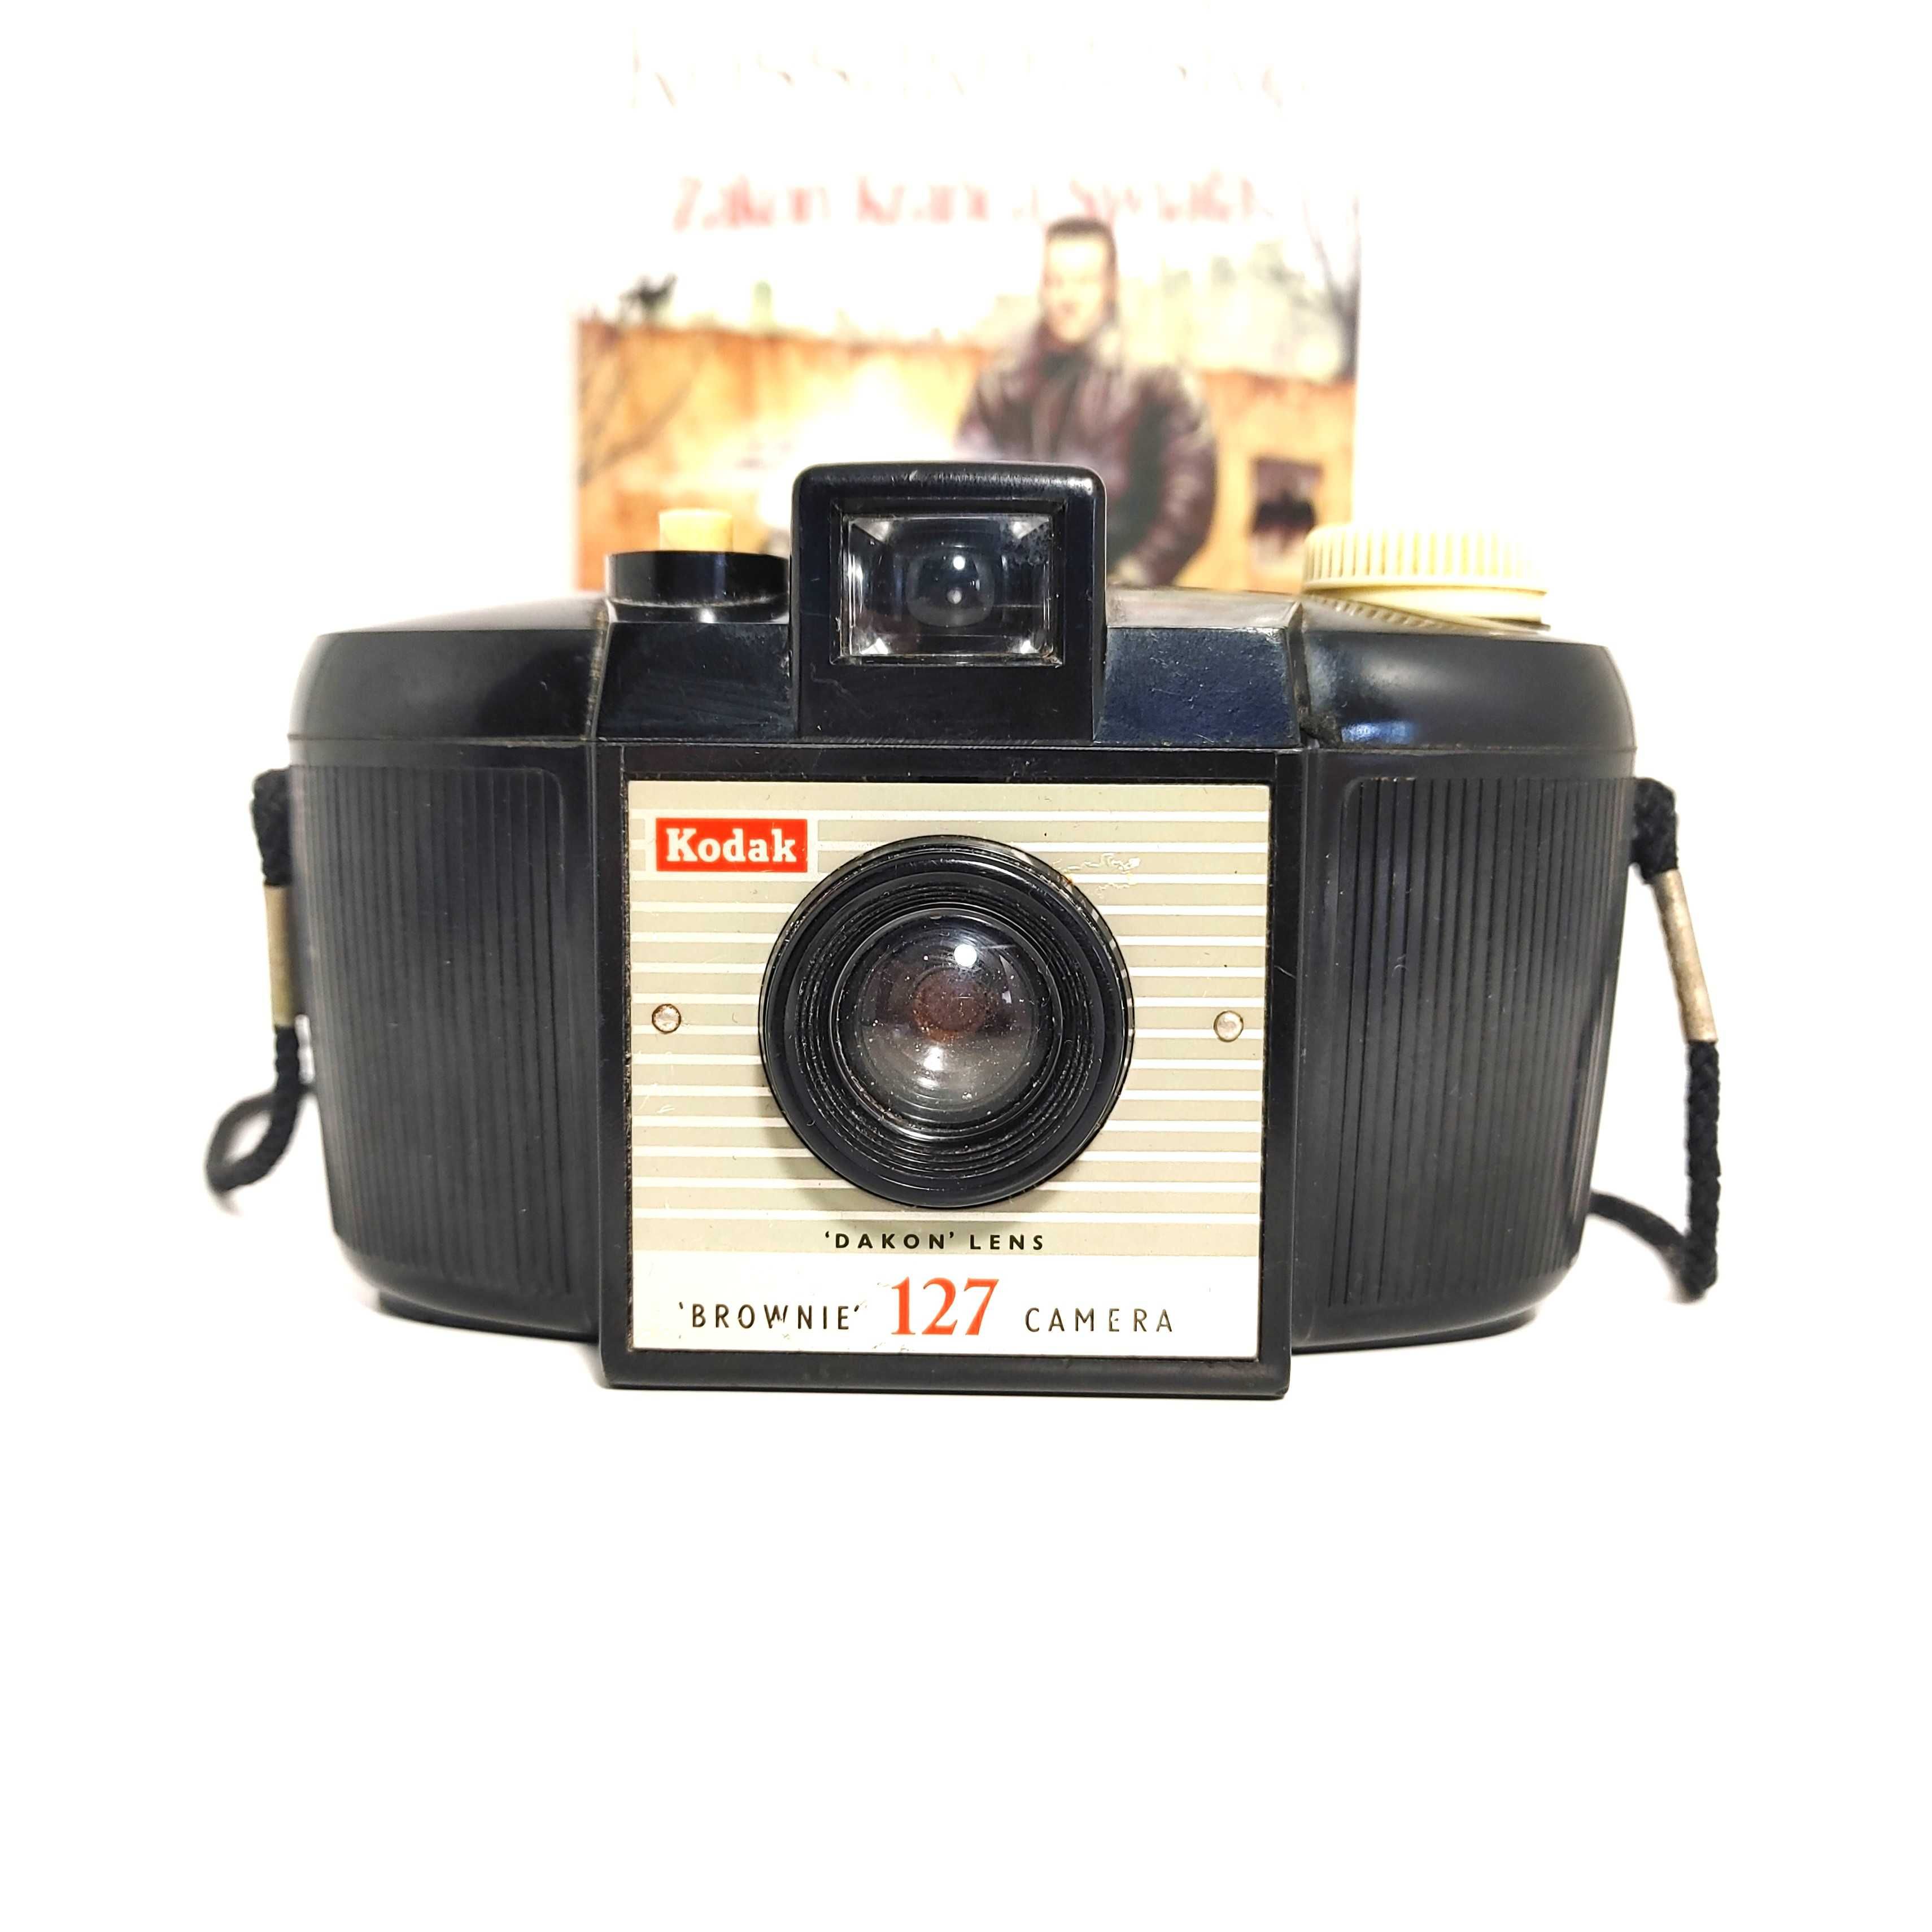 Aparat fotograficzny 1952 r RETRO Kodak Brownie 127 Camera obscura BOX